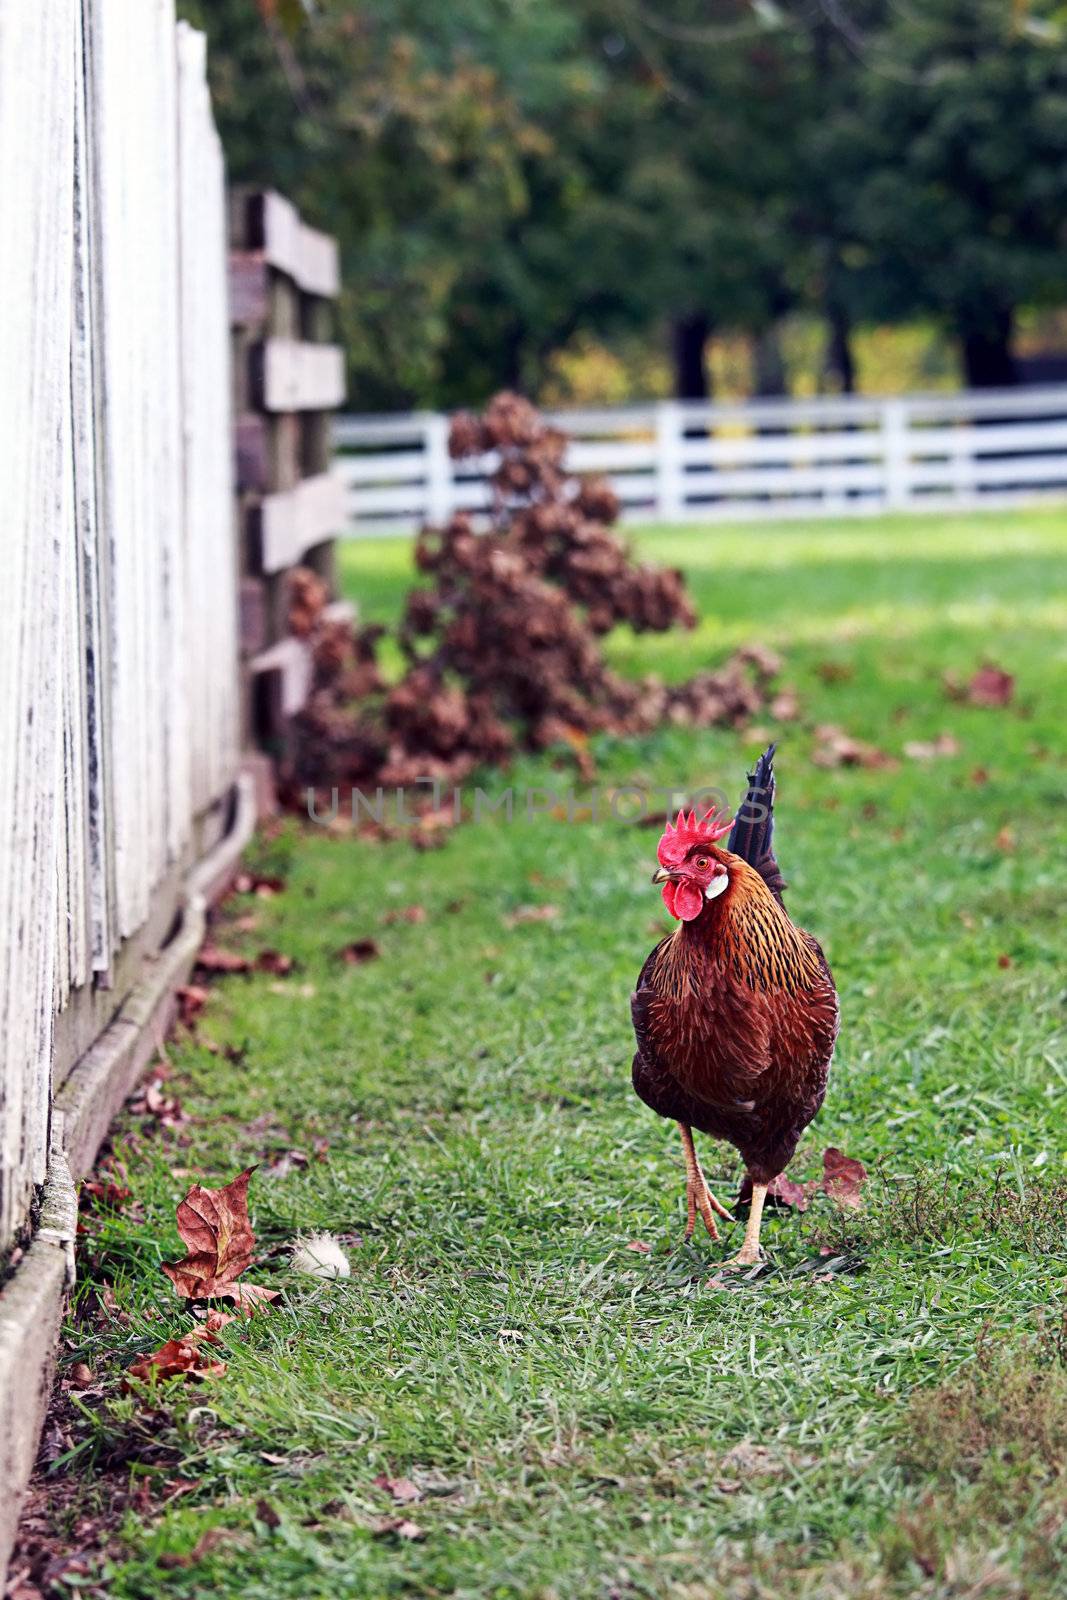 Free range rooster walking around the farm yard.